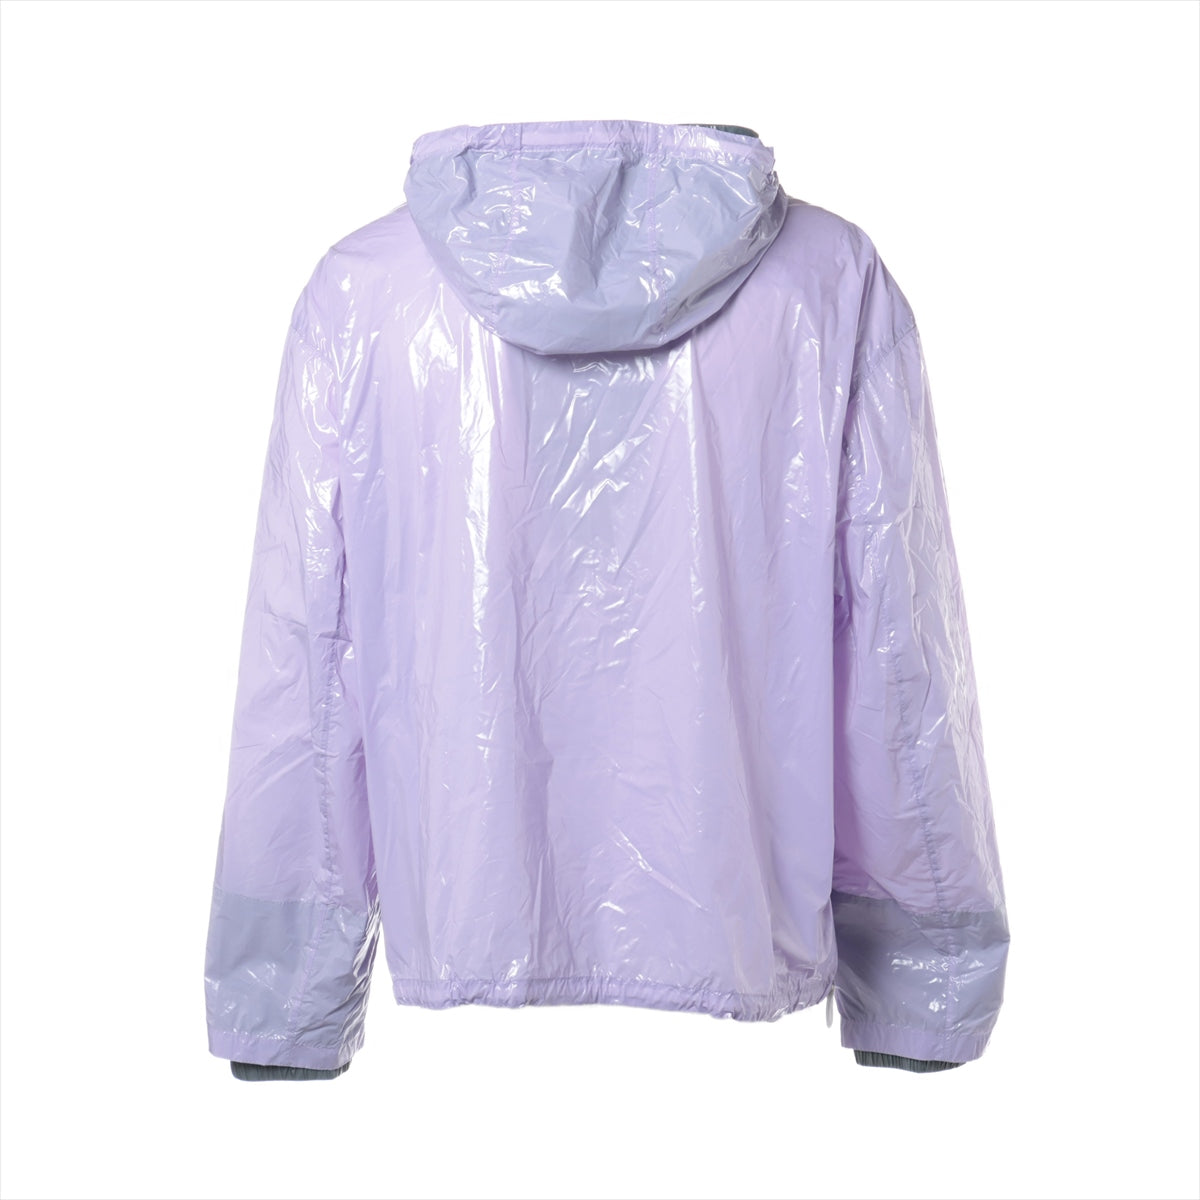 Hermès Serie Cotton & nylon Nylon Jacket 50 Men's Purple  anorak hoodie